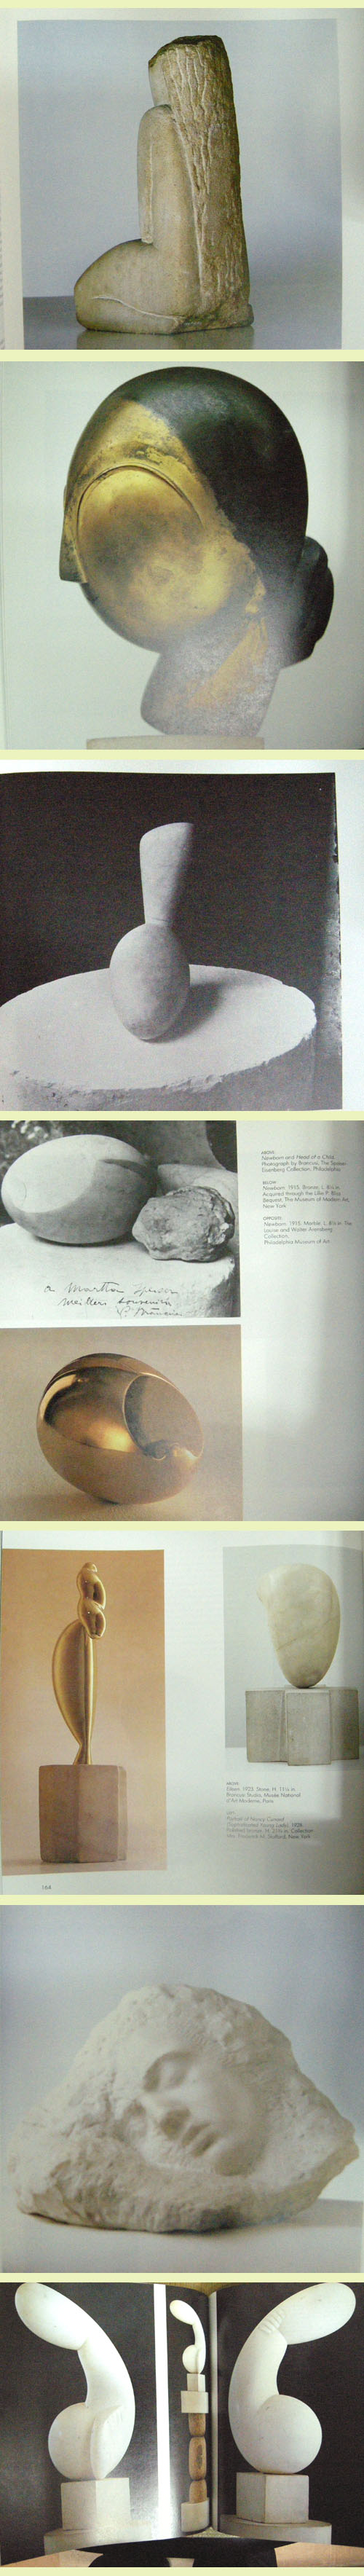 Brancusi: Revised Edition(브랑쿠시) - 조각. 조소. 환경미술 -